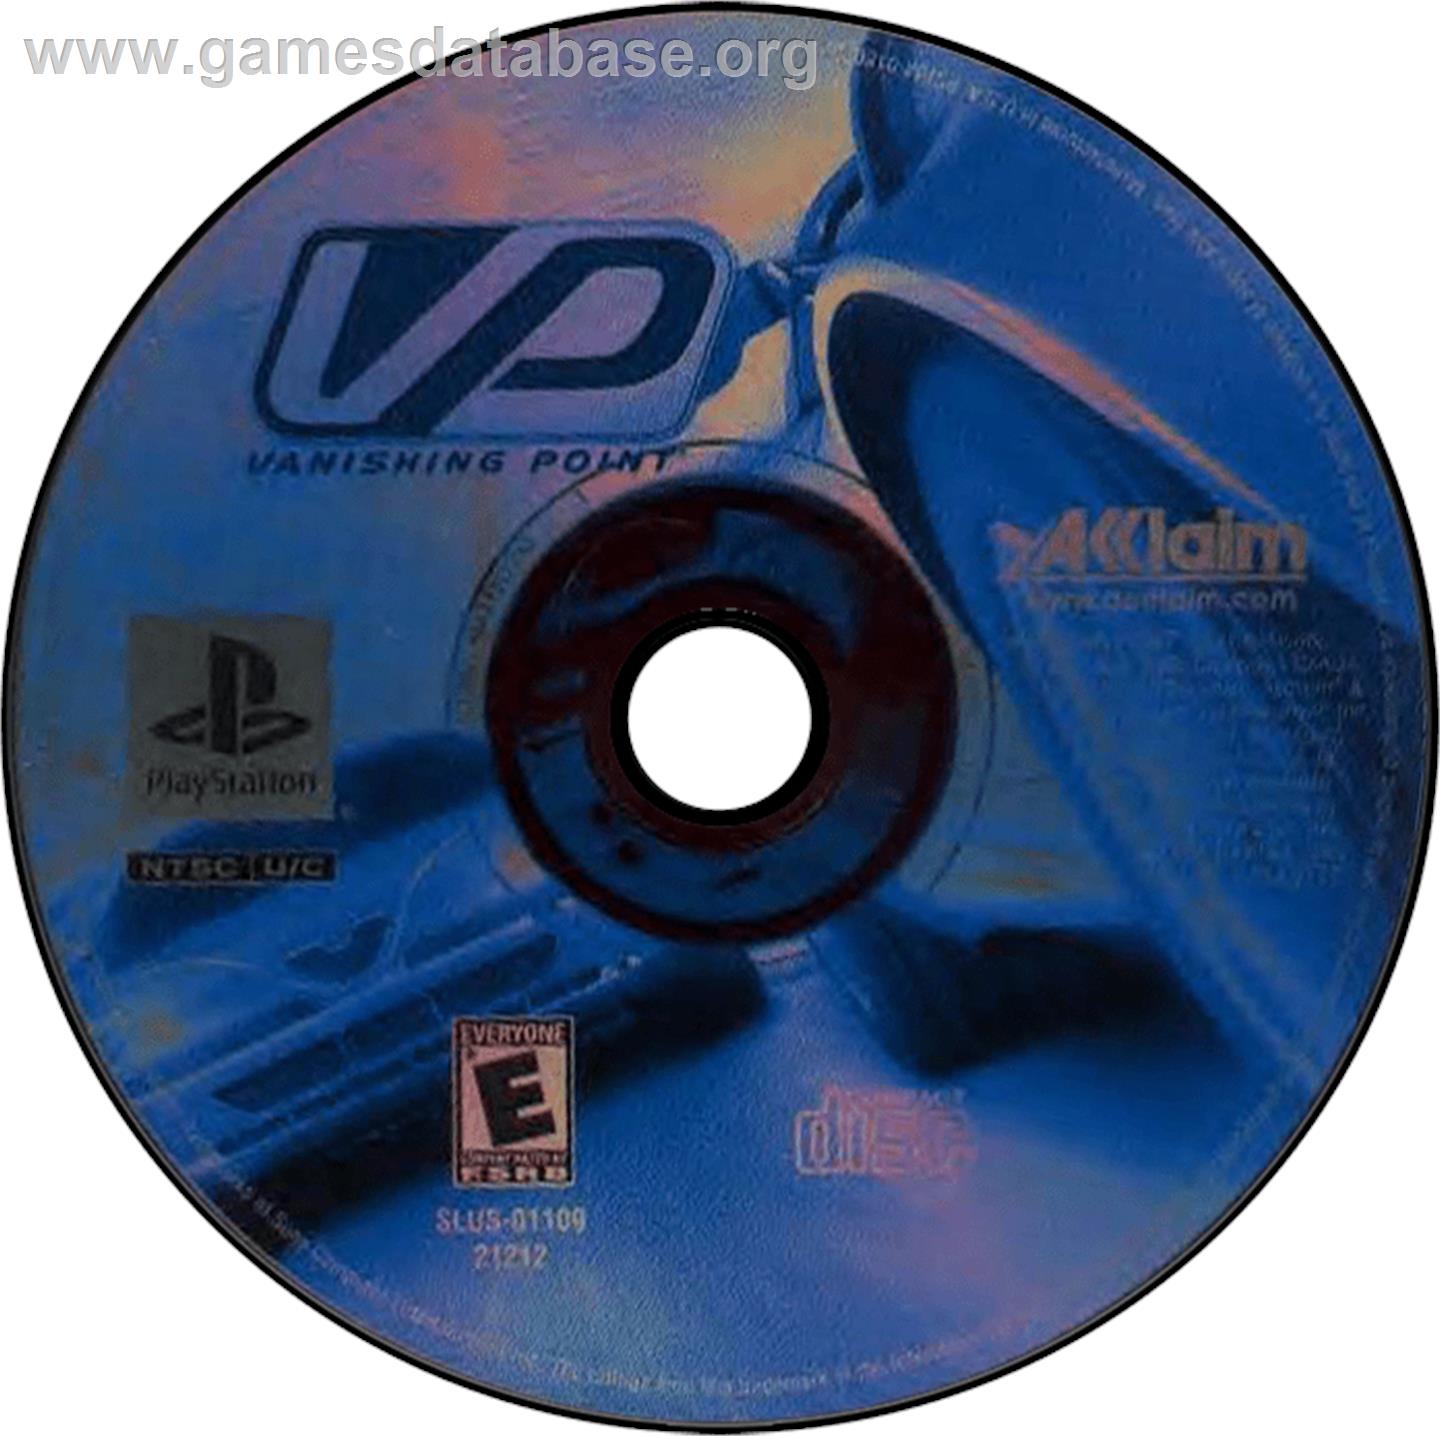 Vanishing Point - Sony Playstation - Artwork - Disc